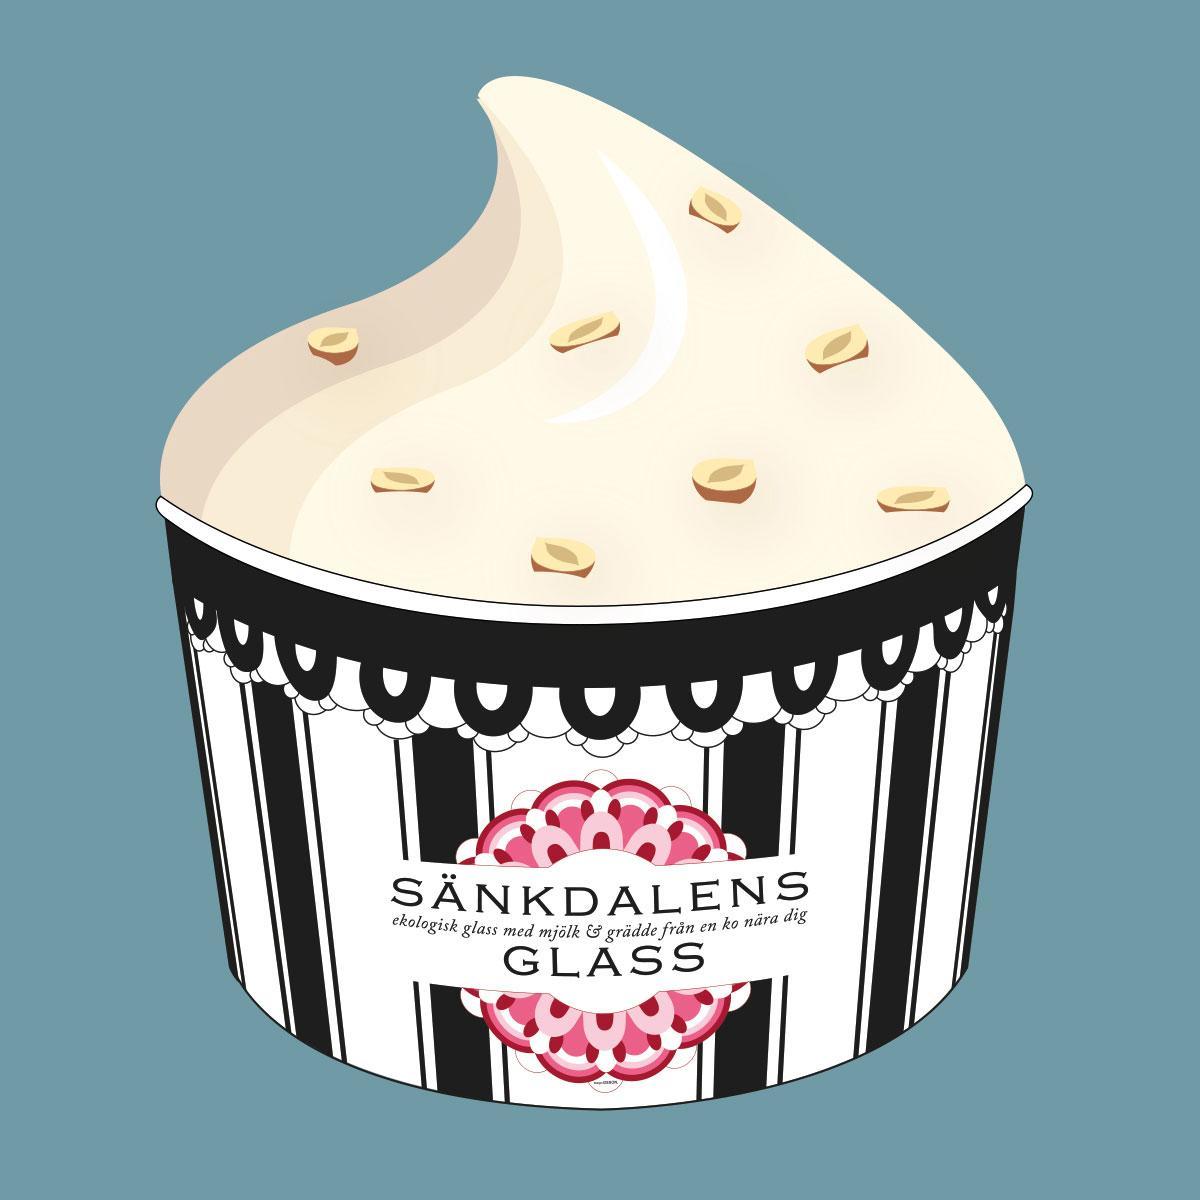 Sänkdalens glass's Hazelnut ice cream '